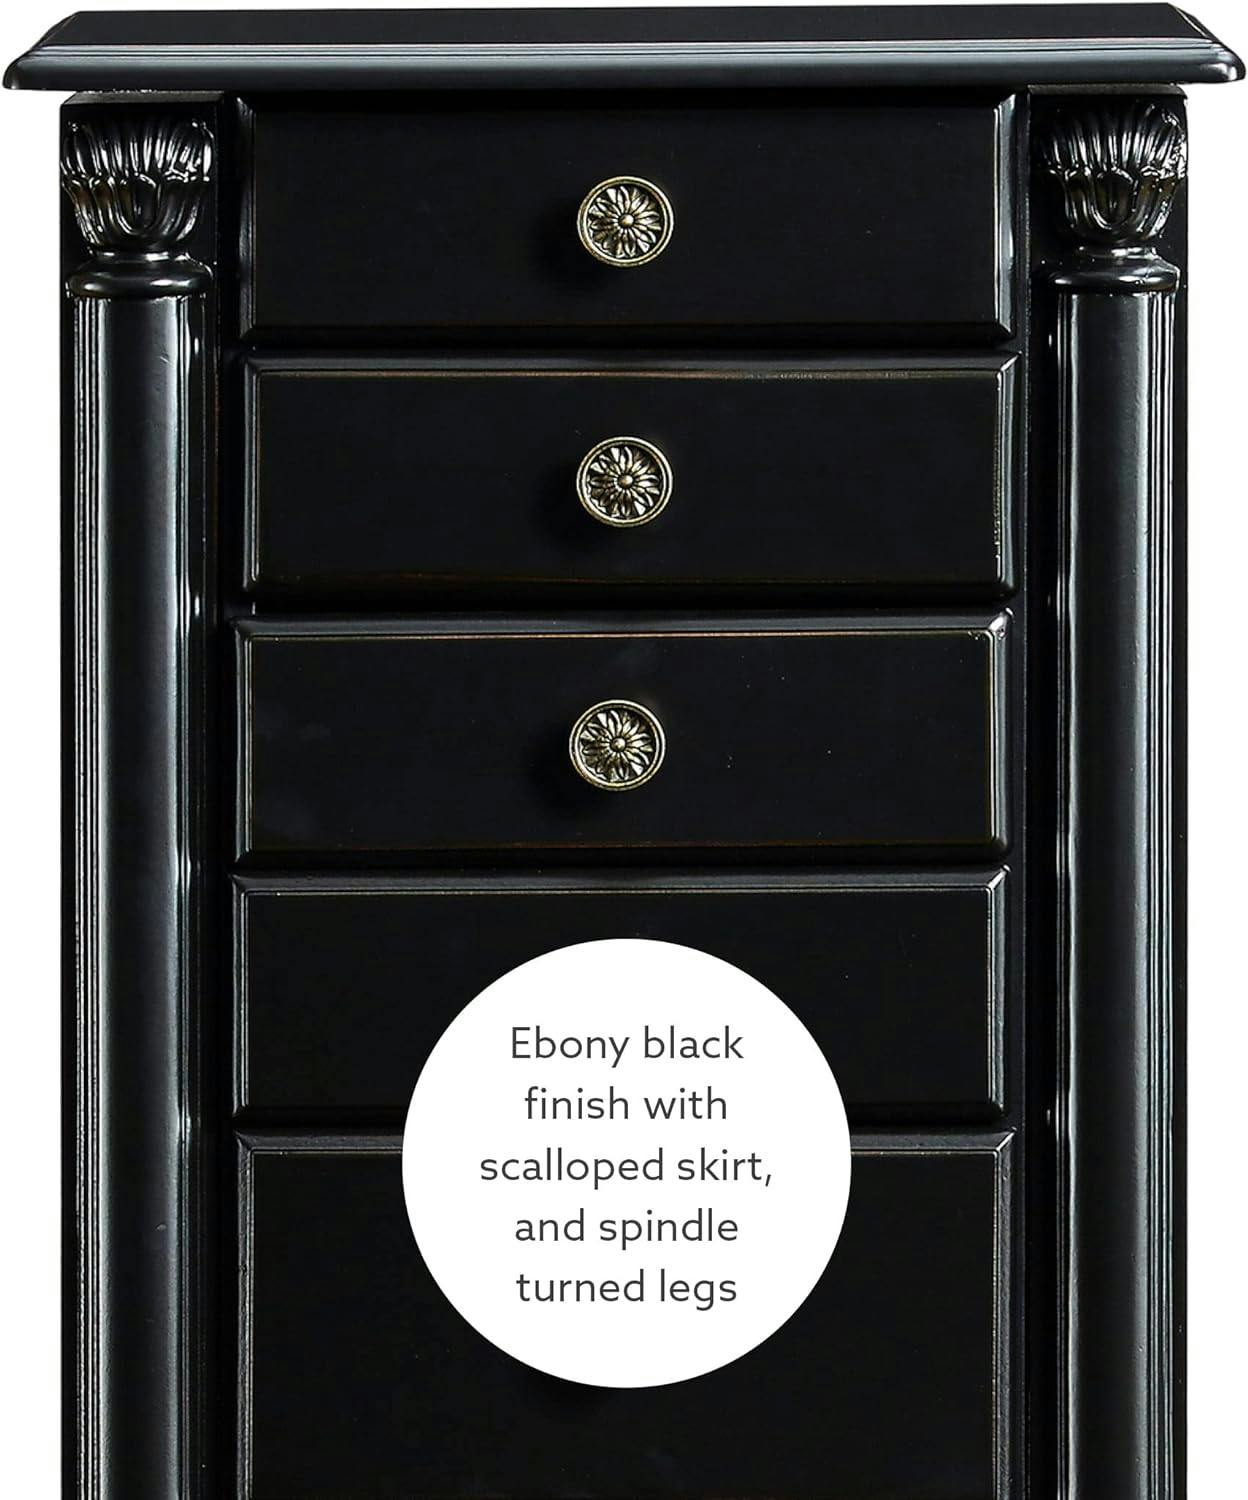 Petite Ebony Black Jewelry Armoire with Mirror and Plush Lining